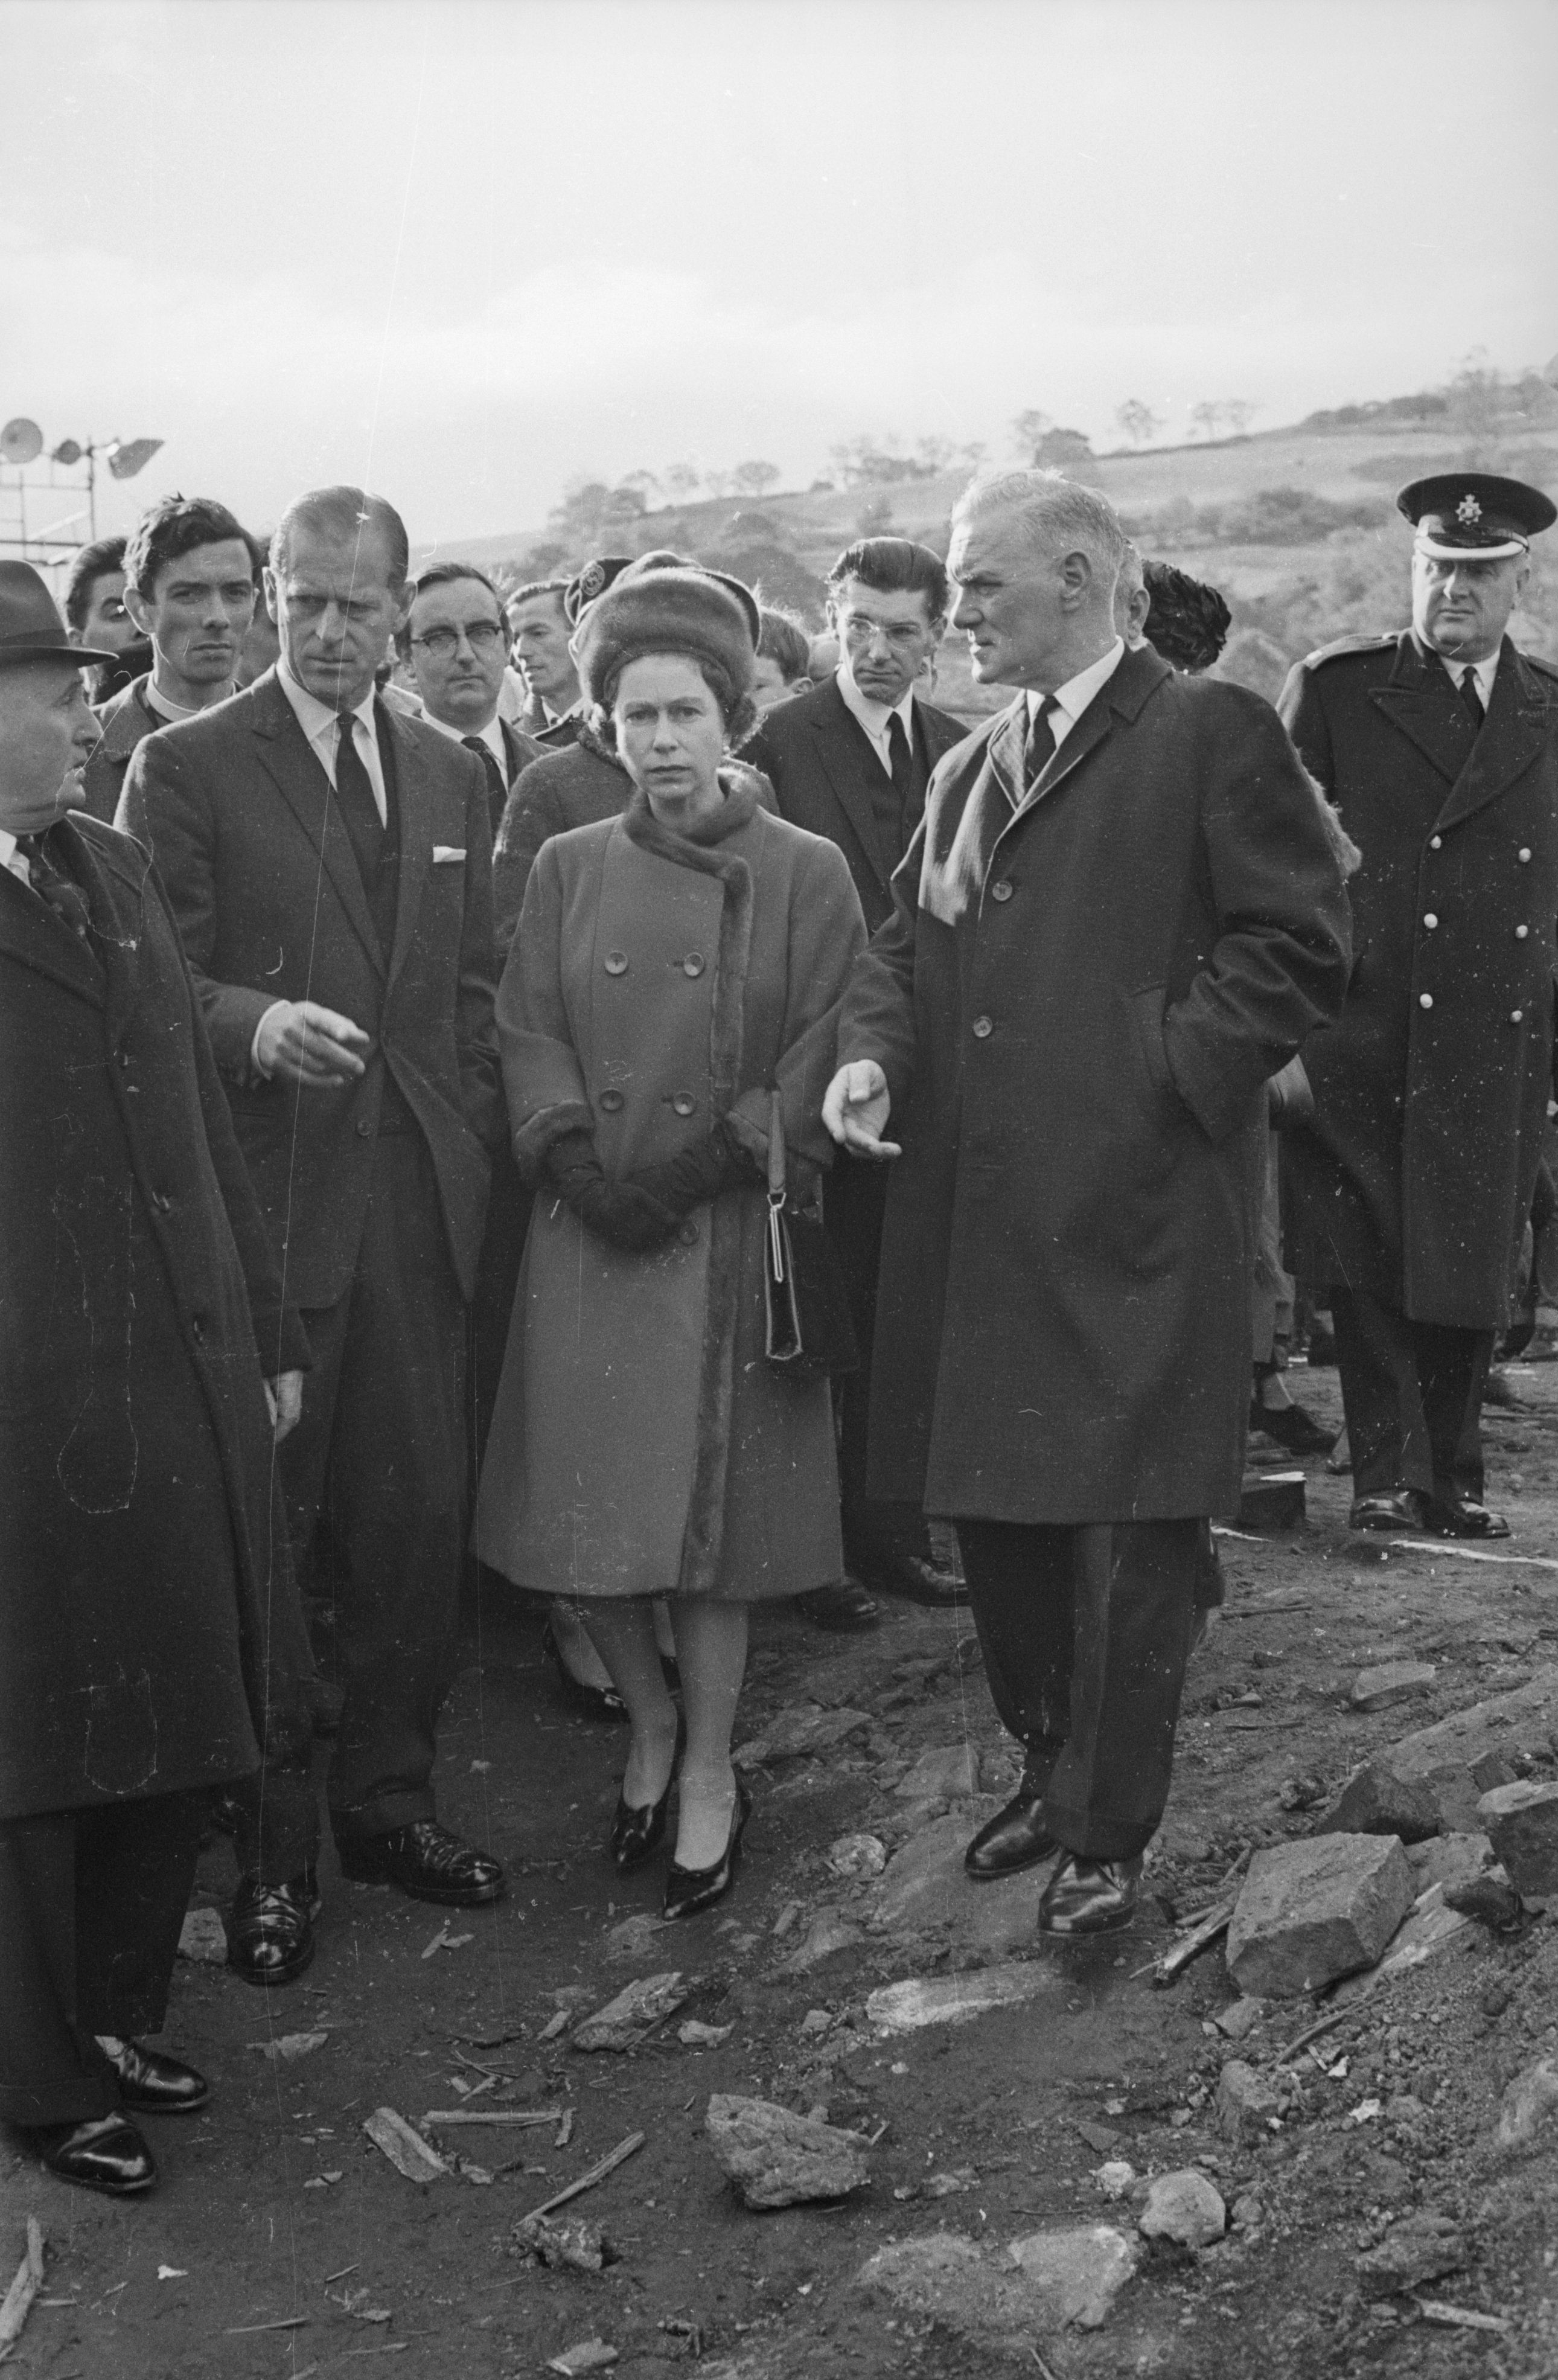 did the queen visit aberfan in 1966